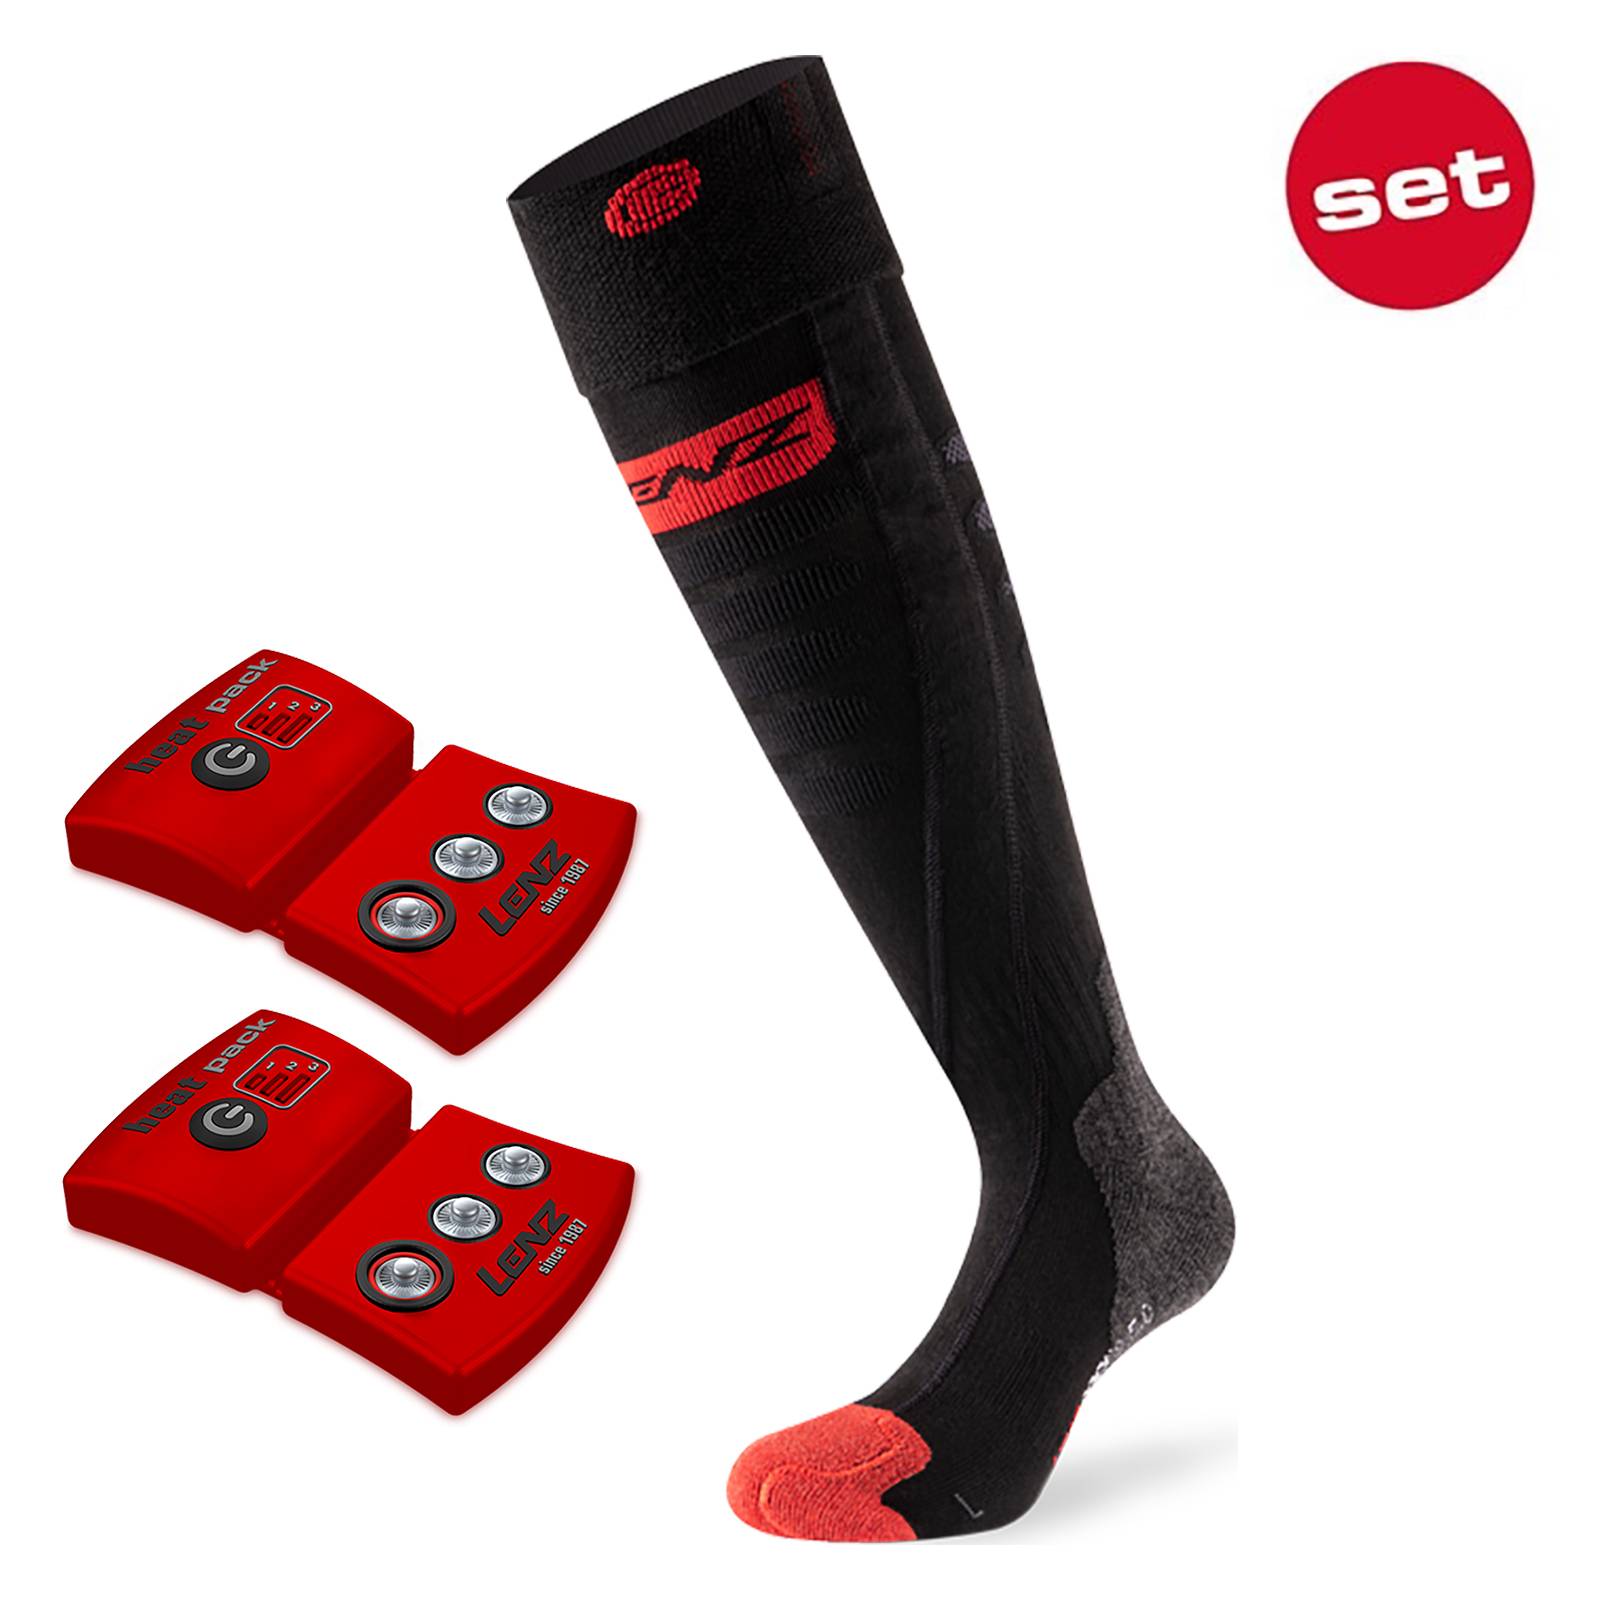 Lenz heat socks 5.0 Toe Cap slim fit + heat pack Akku + beheizbare Socken Set